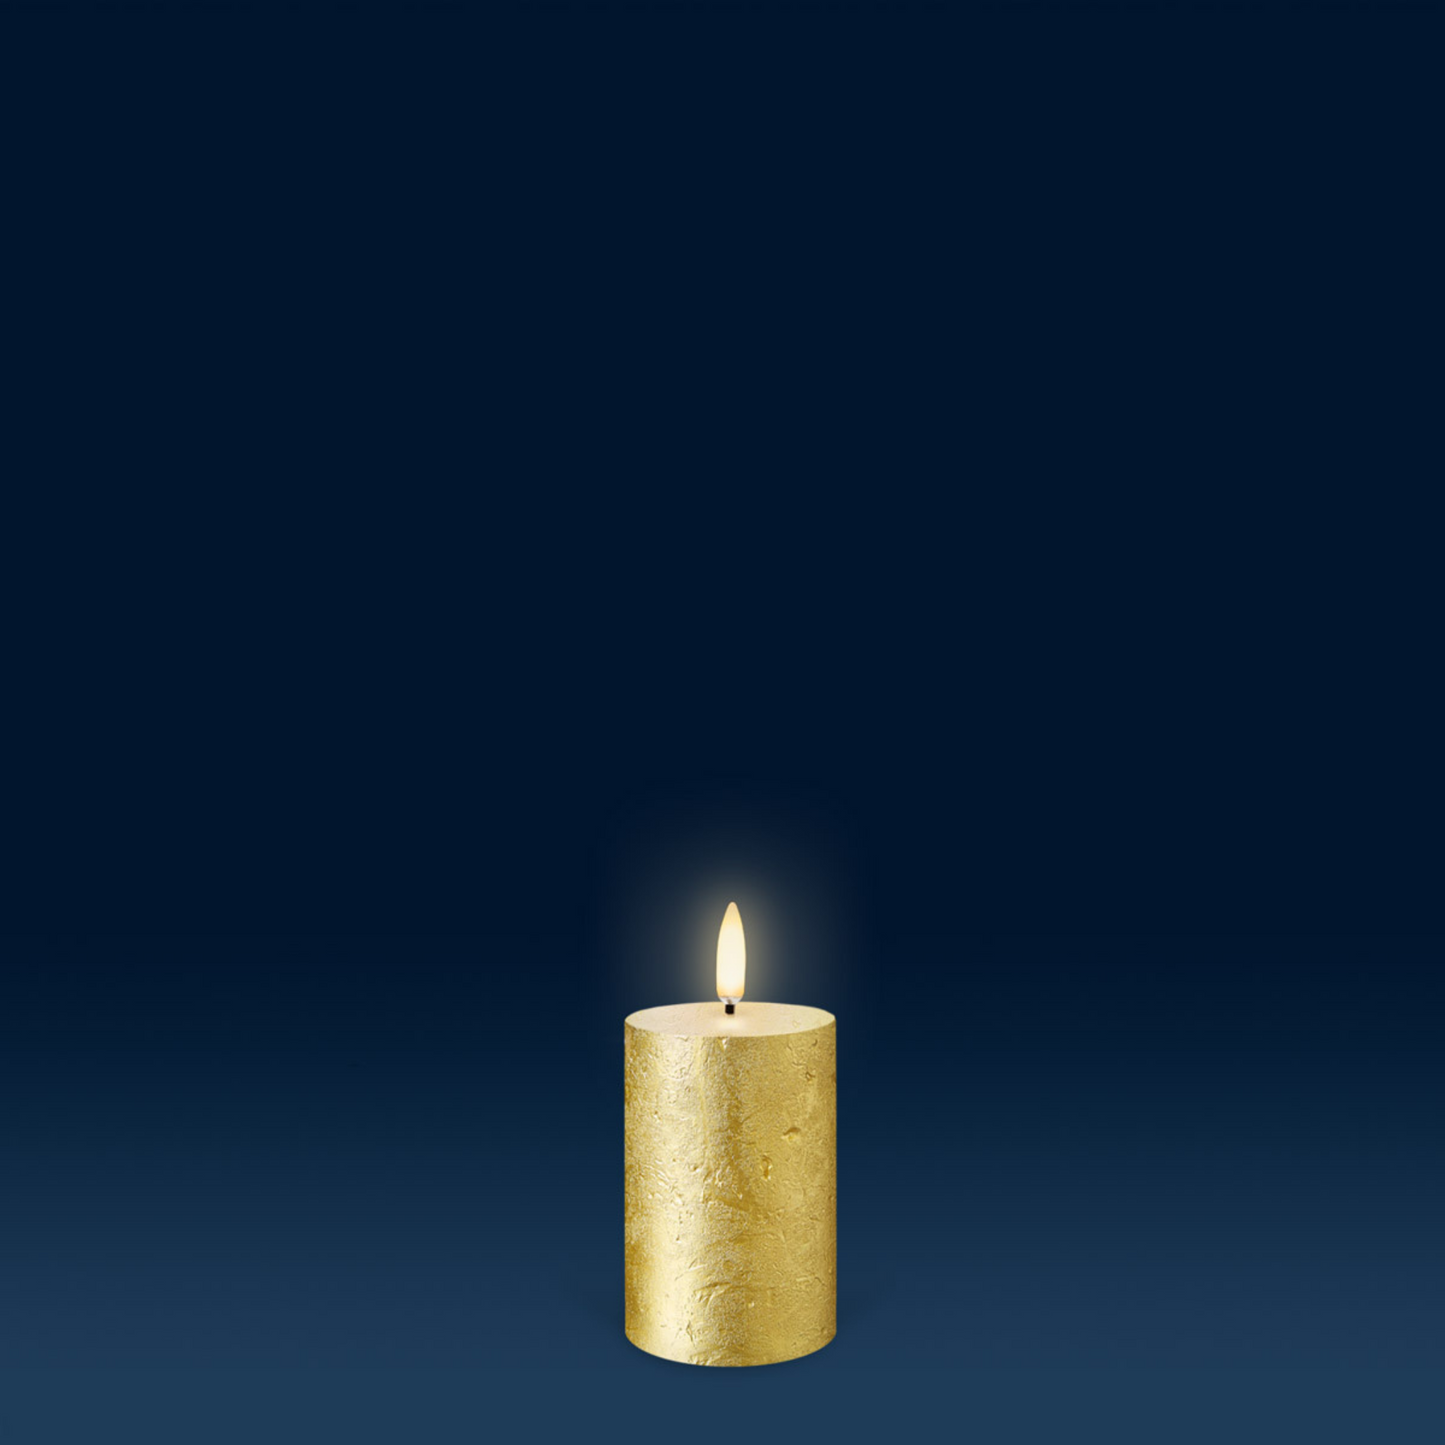 LED Pillar Candles Gold